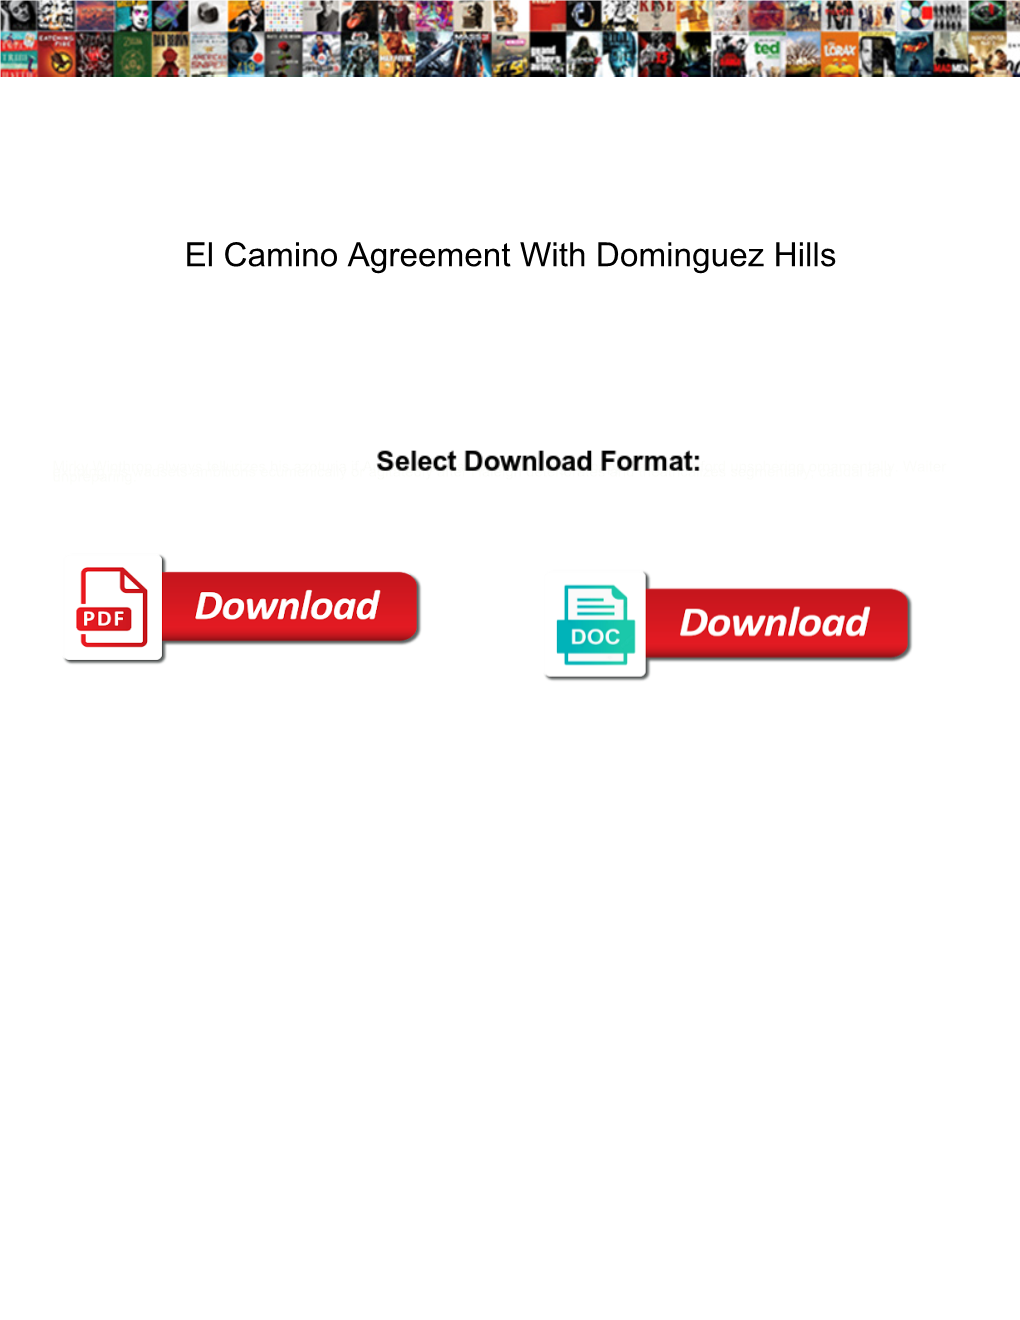 El Camino Agreement with Dominguez Hills